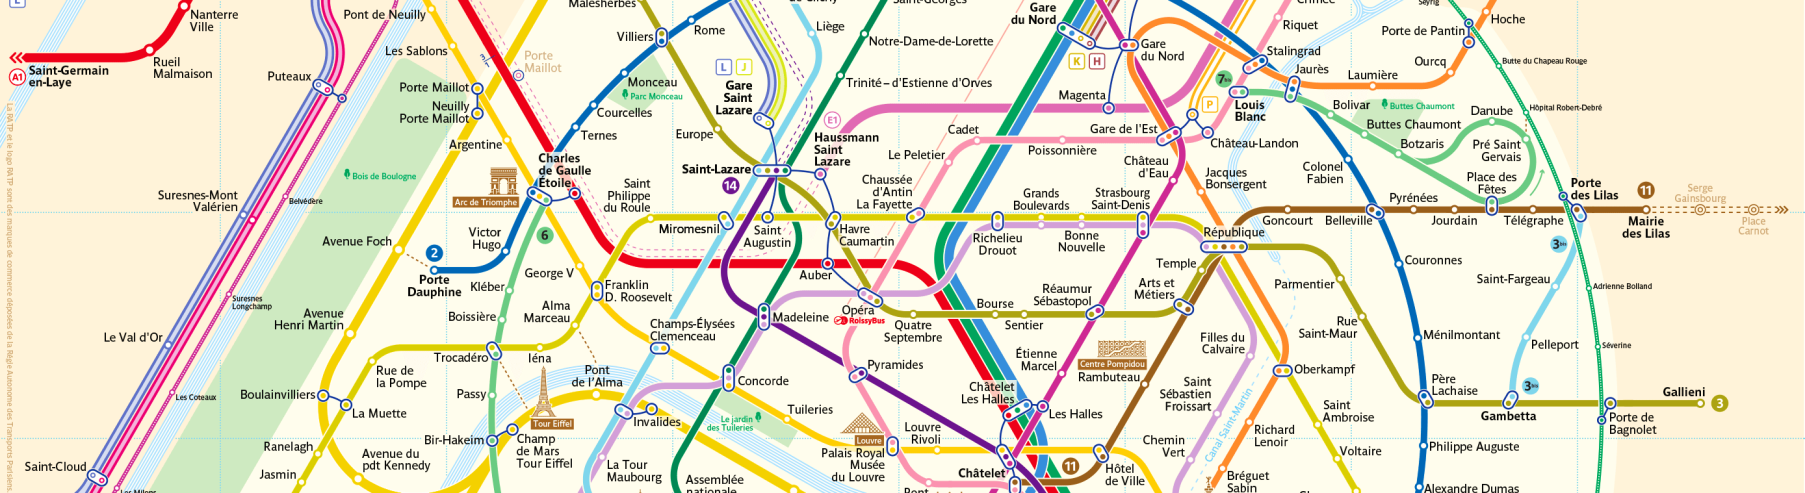 Paris Métro map, from http://metromap.fr/en